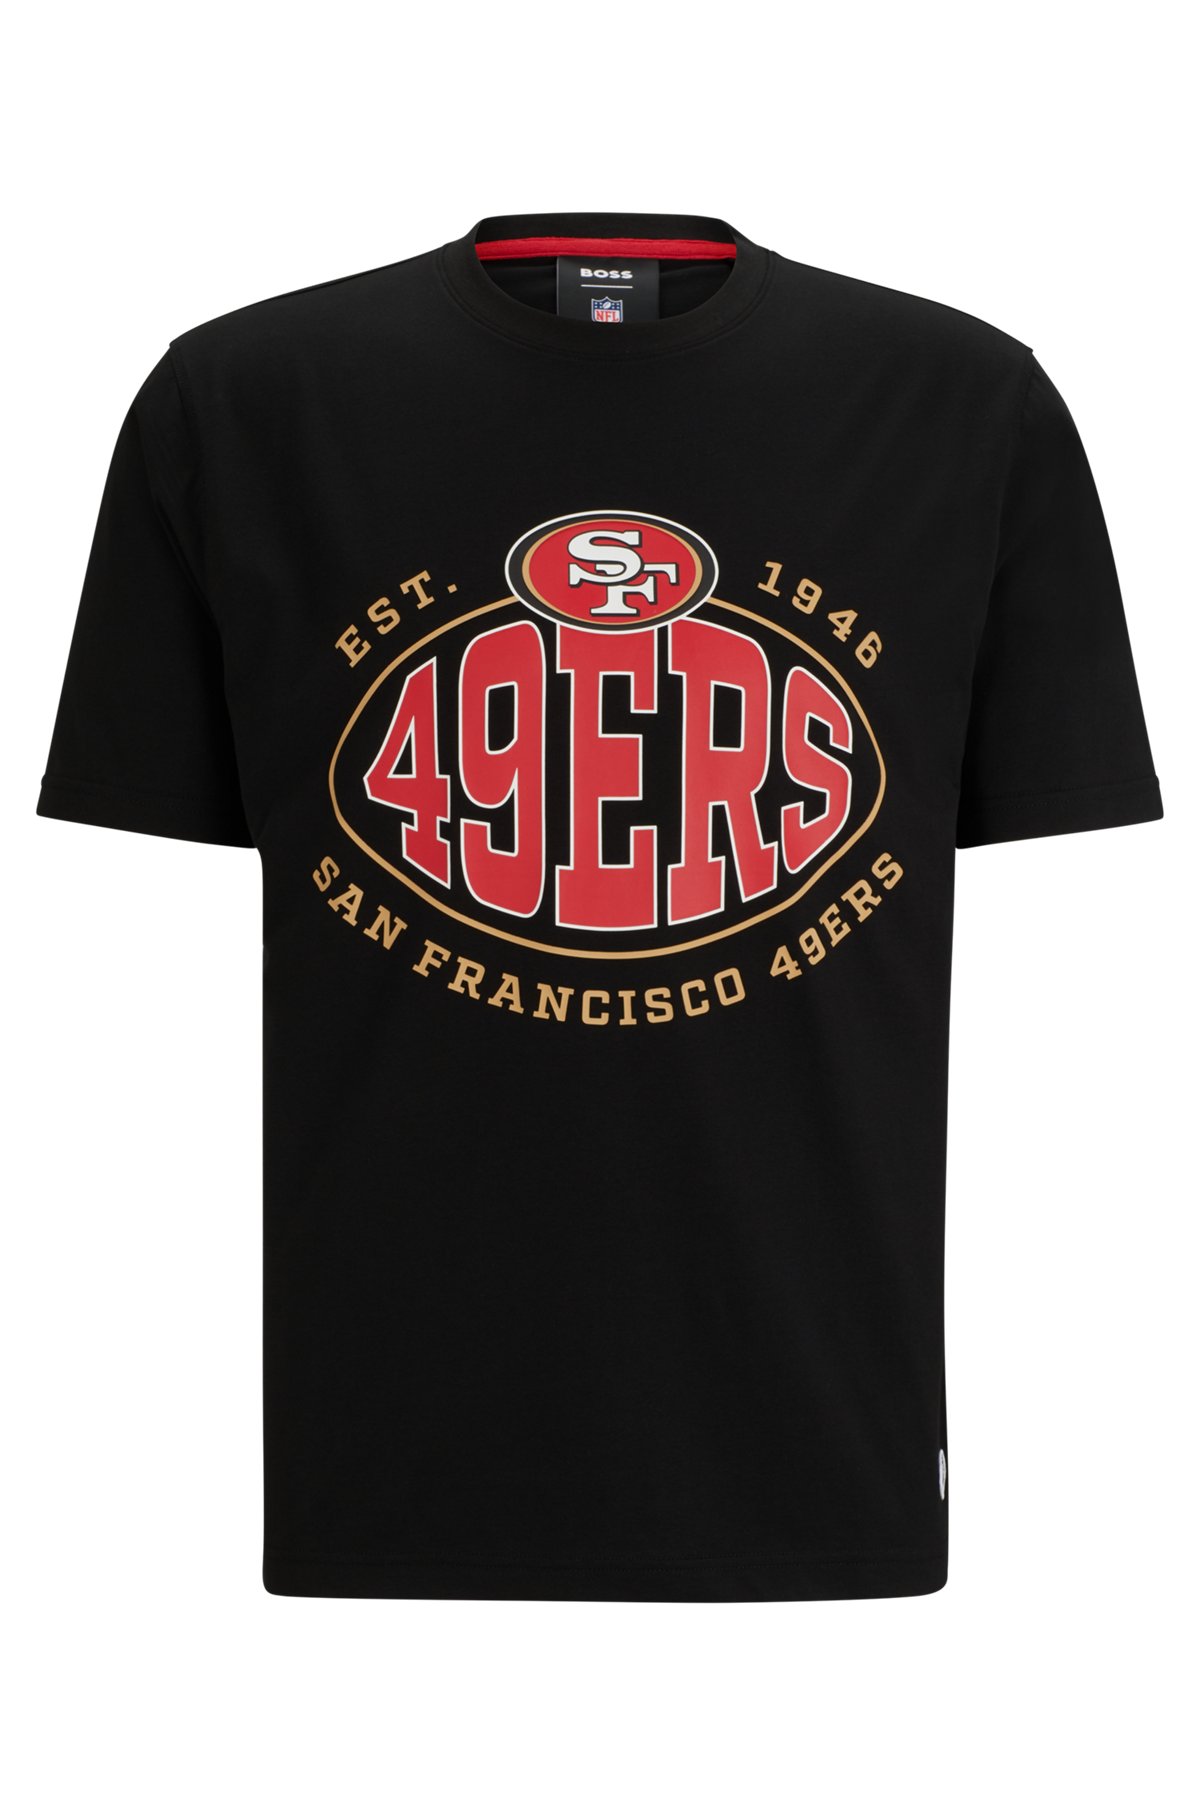  T-shirt en coton stretch BOSS x NFL avec logo du partenariat, 49ers